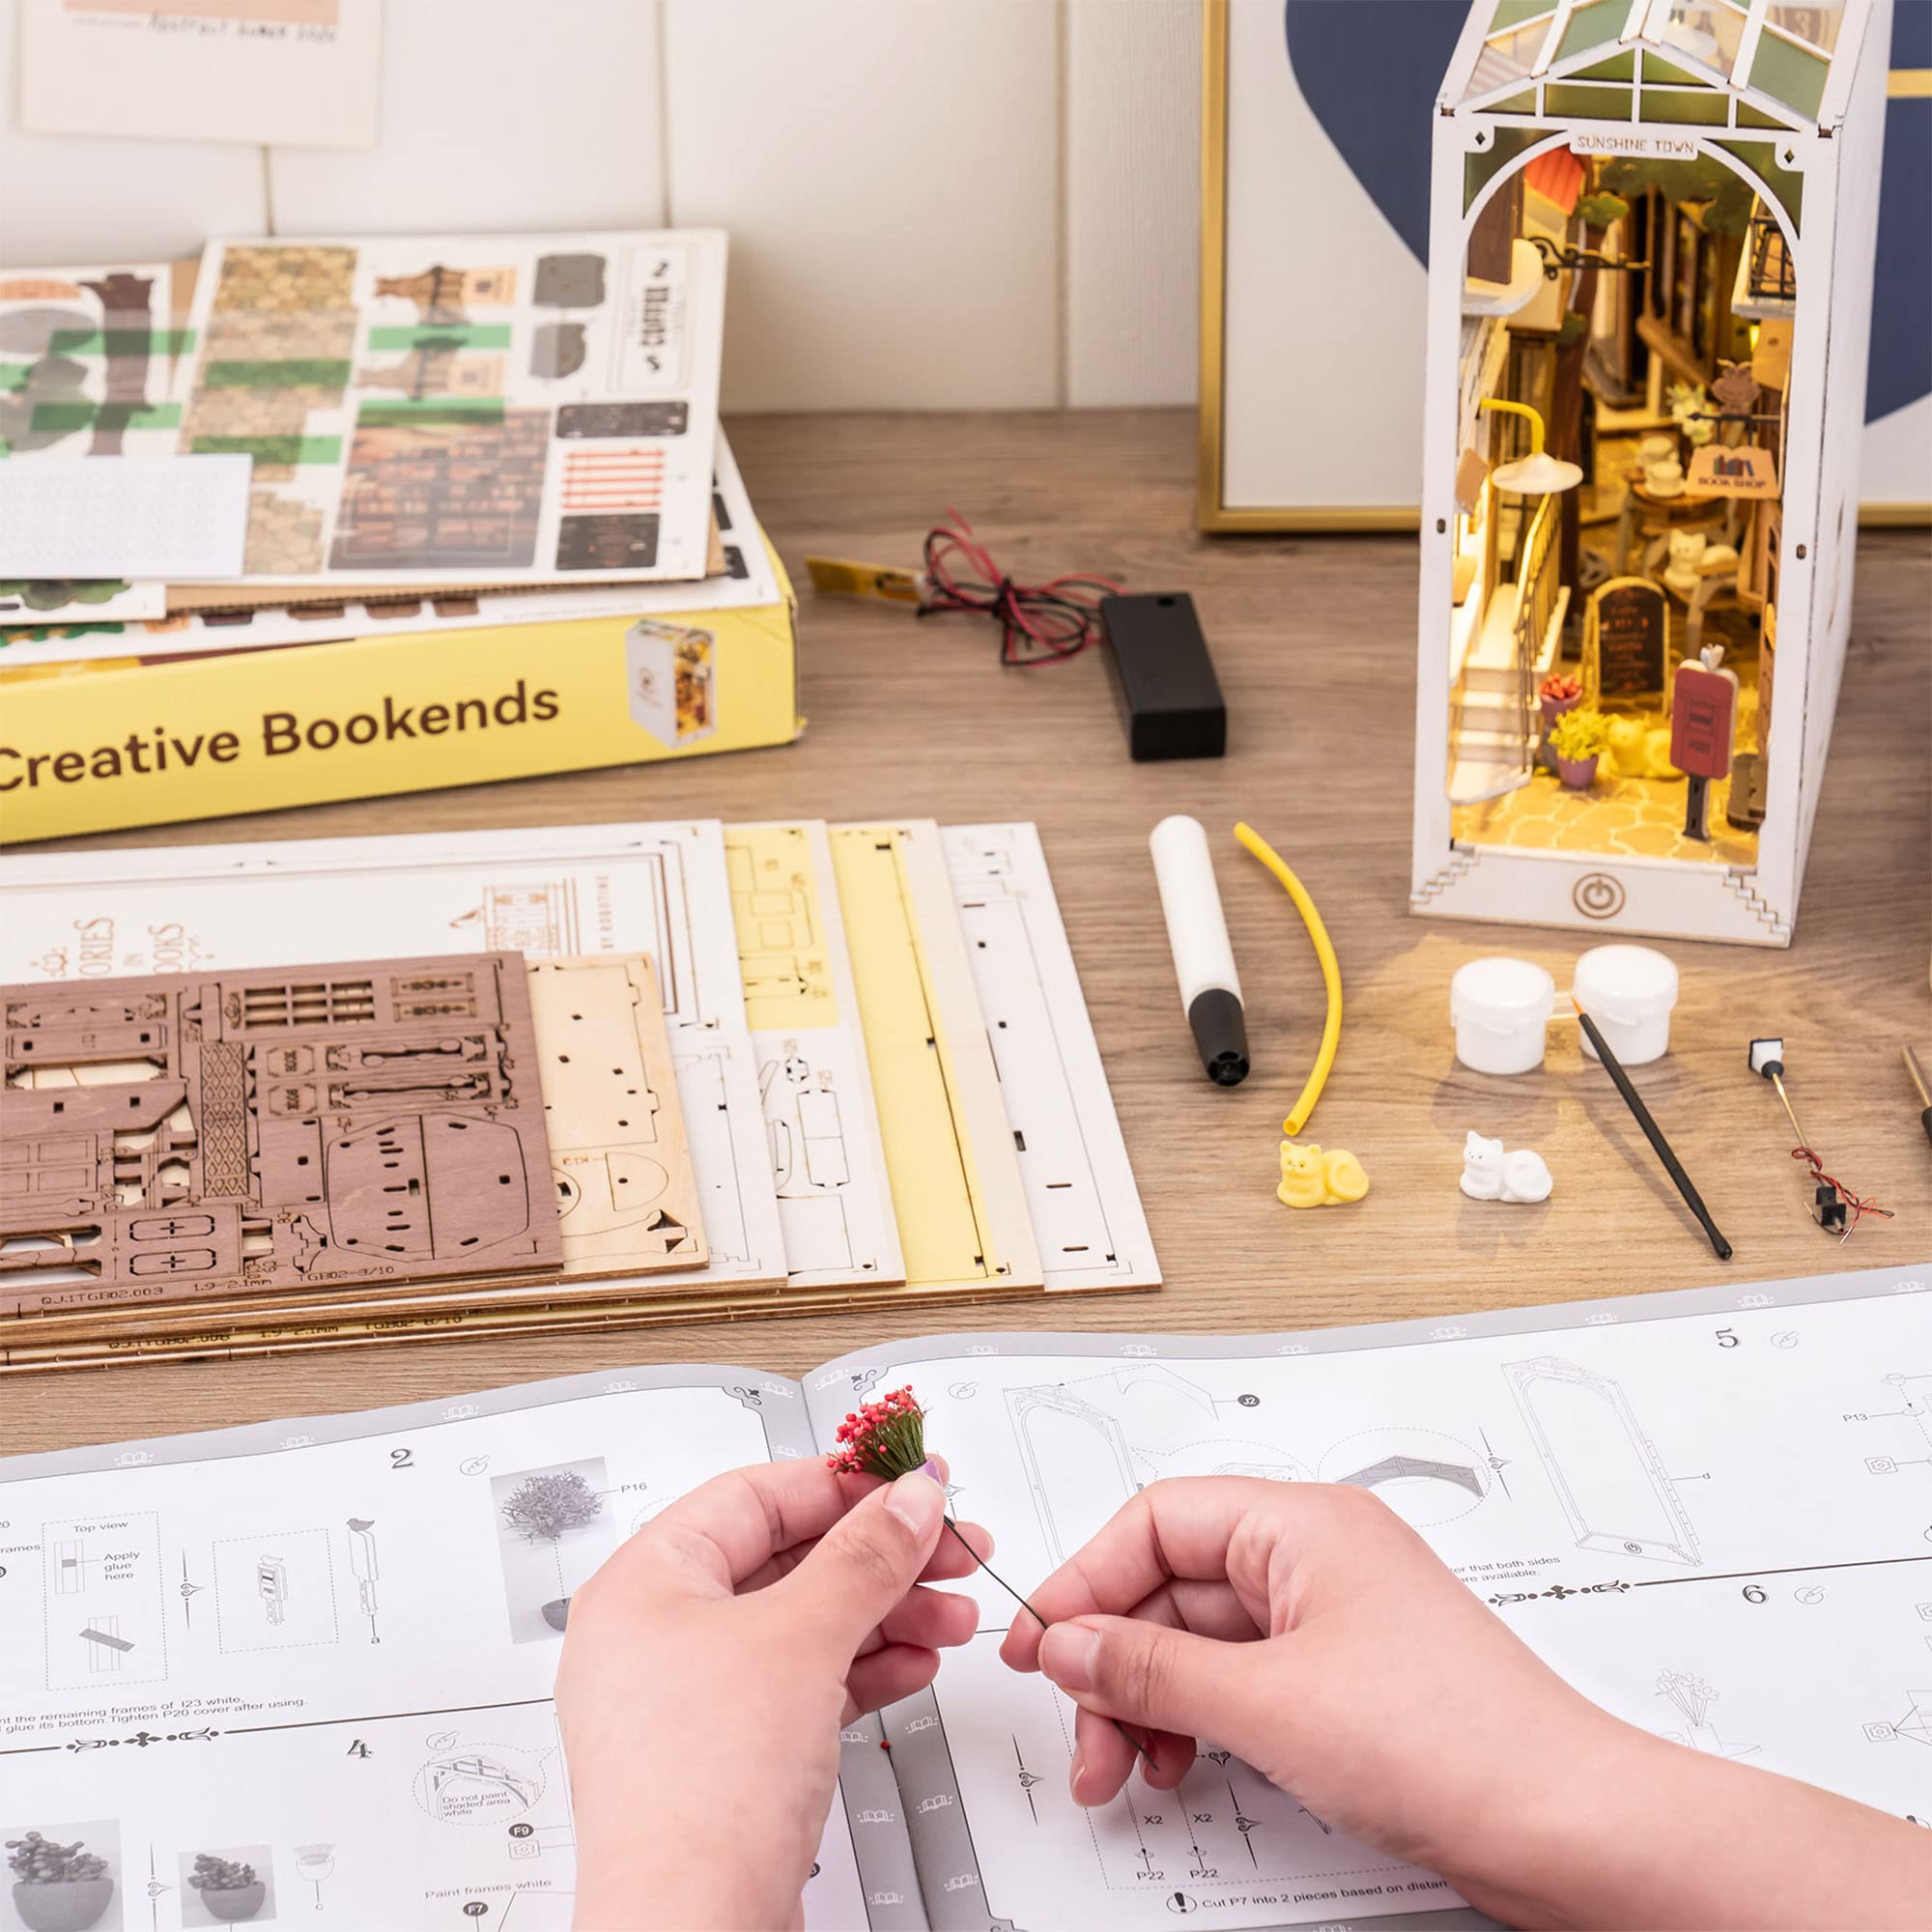 Rolife DIY Miniature Dollhouse Greenhouse Kits and DIY Sunshine Town Book Nook Kits